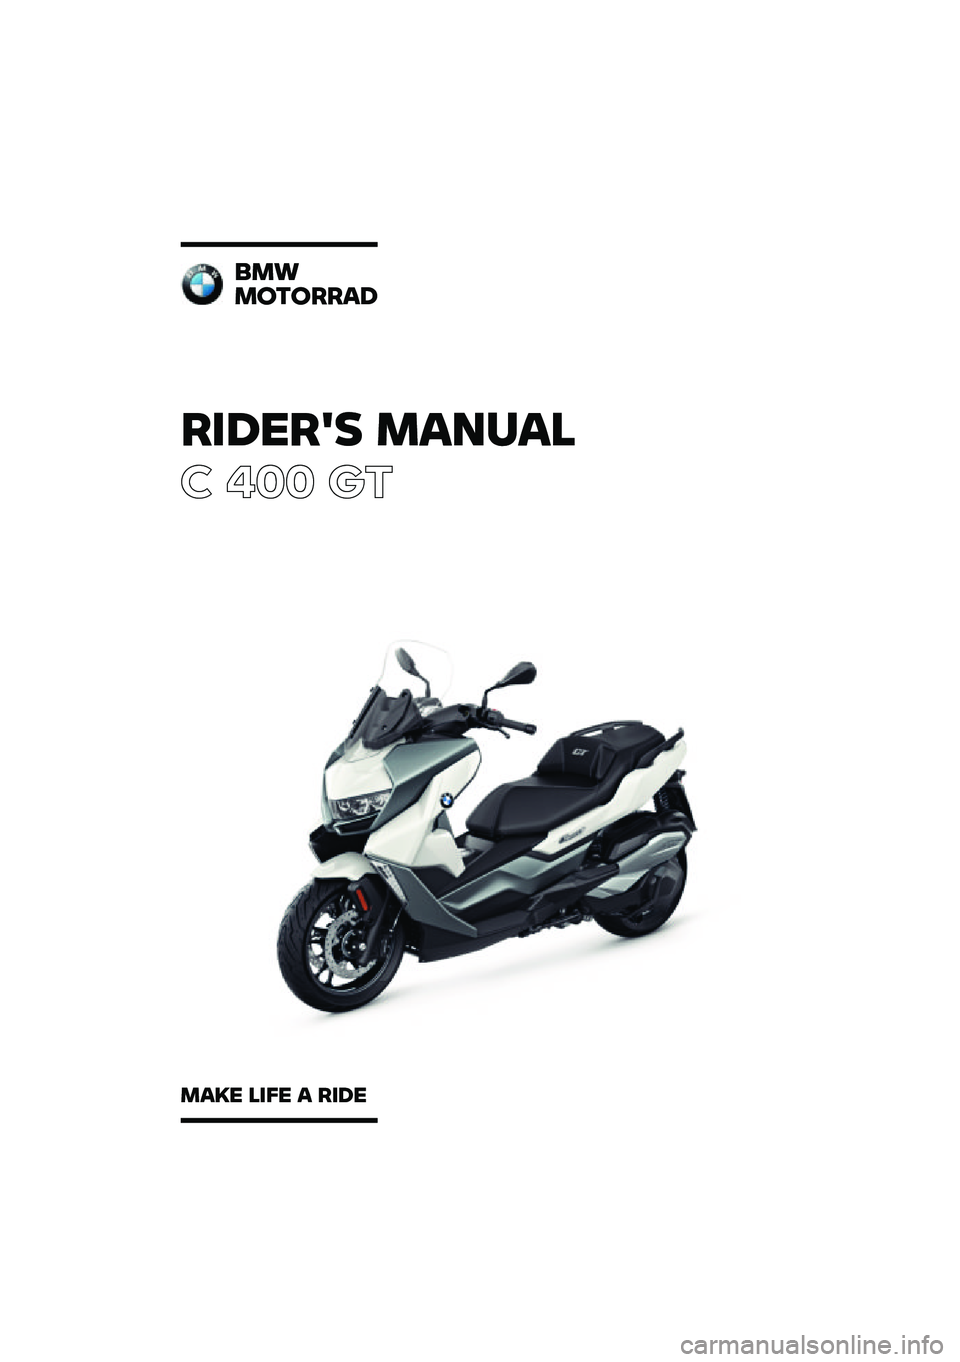 BMW MOTORRAD C 400 GT 2020  Riders Manual (in English) ������� �\b�	�
��	�\f
� ��� ��\b
�
�\b�
�\b������	�
�\b�	�� �\f��� �	 ���� 